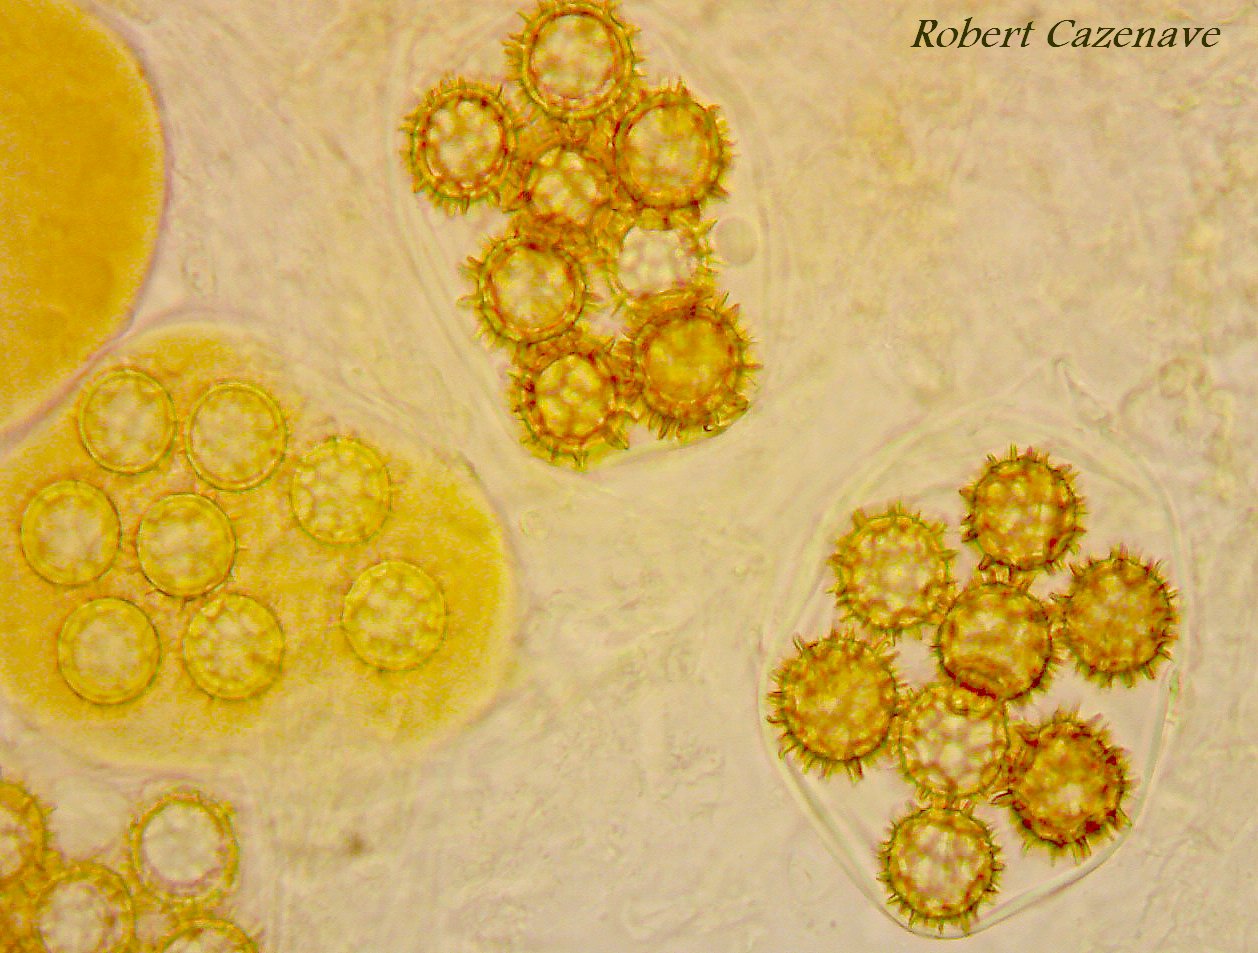 Hydnobolites cerebriformis microscopie 1